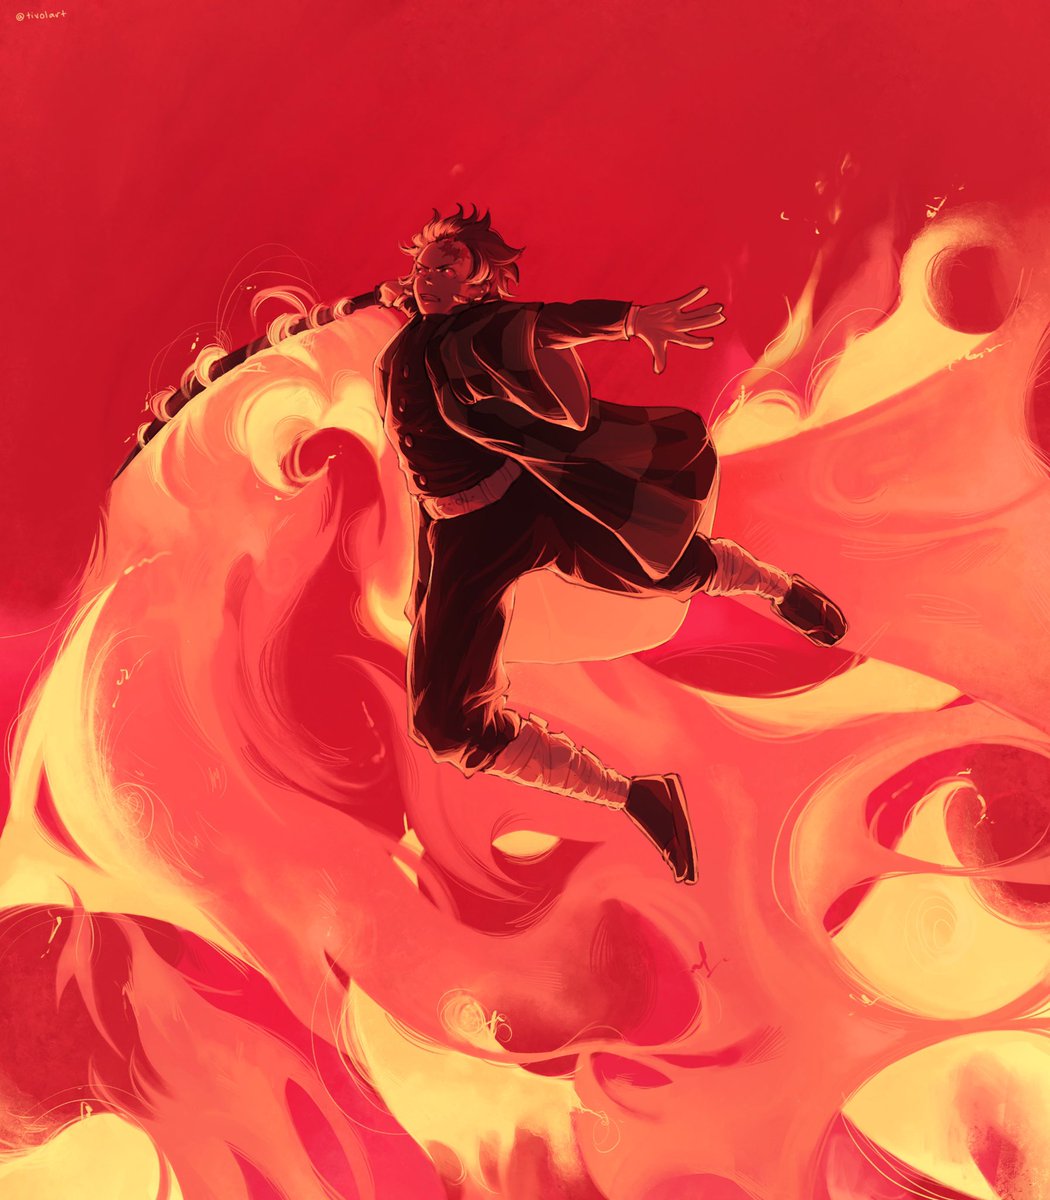 RT @tivolart: dance of the fire god 

#tanjiro #DemonSlayer #Fanart https://t.co/ypLOeisByx